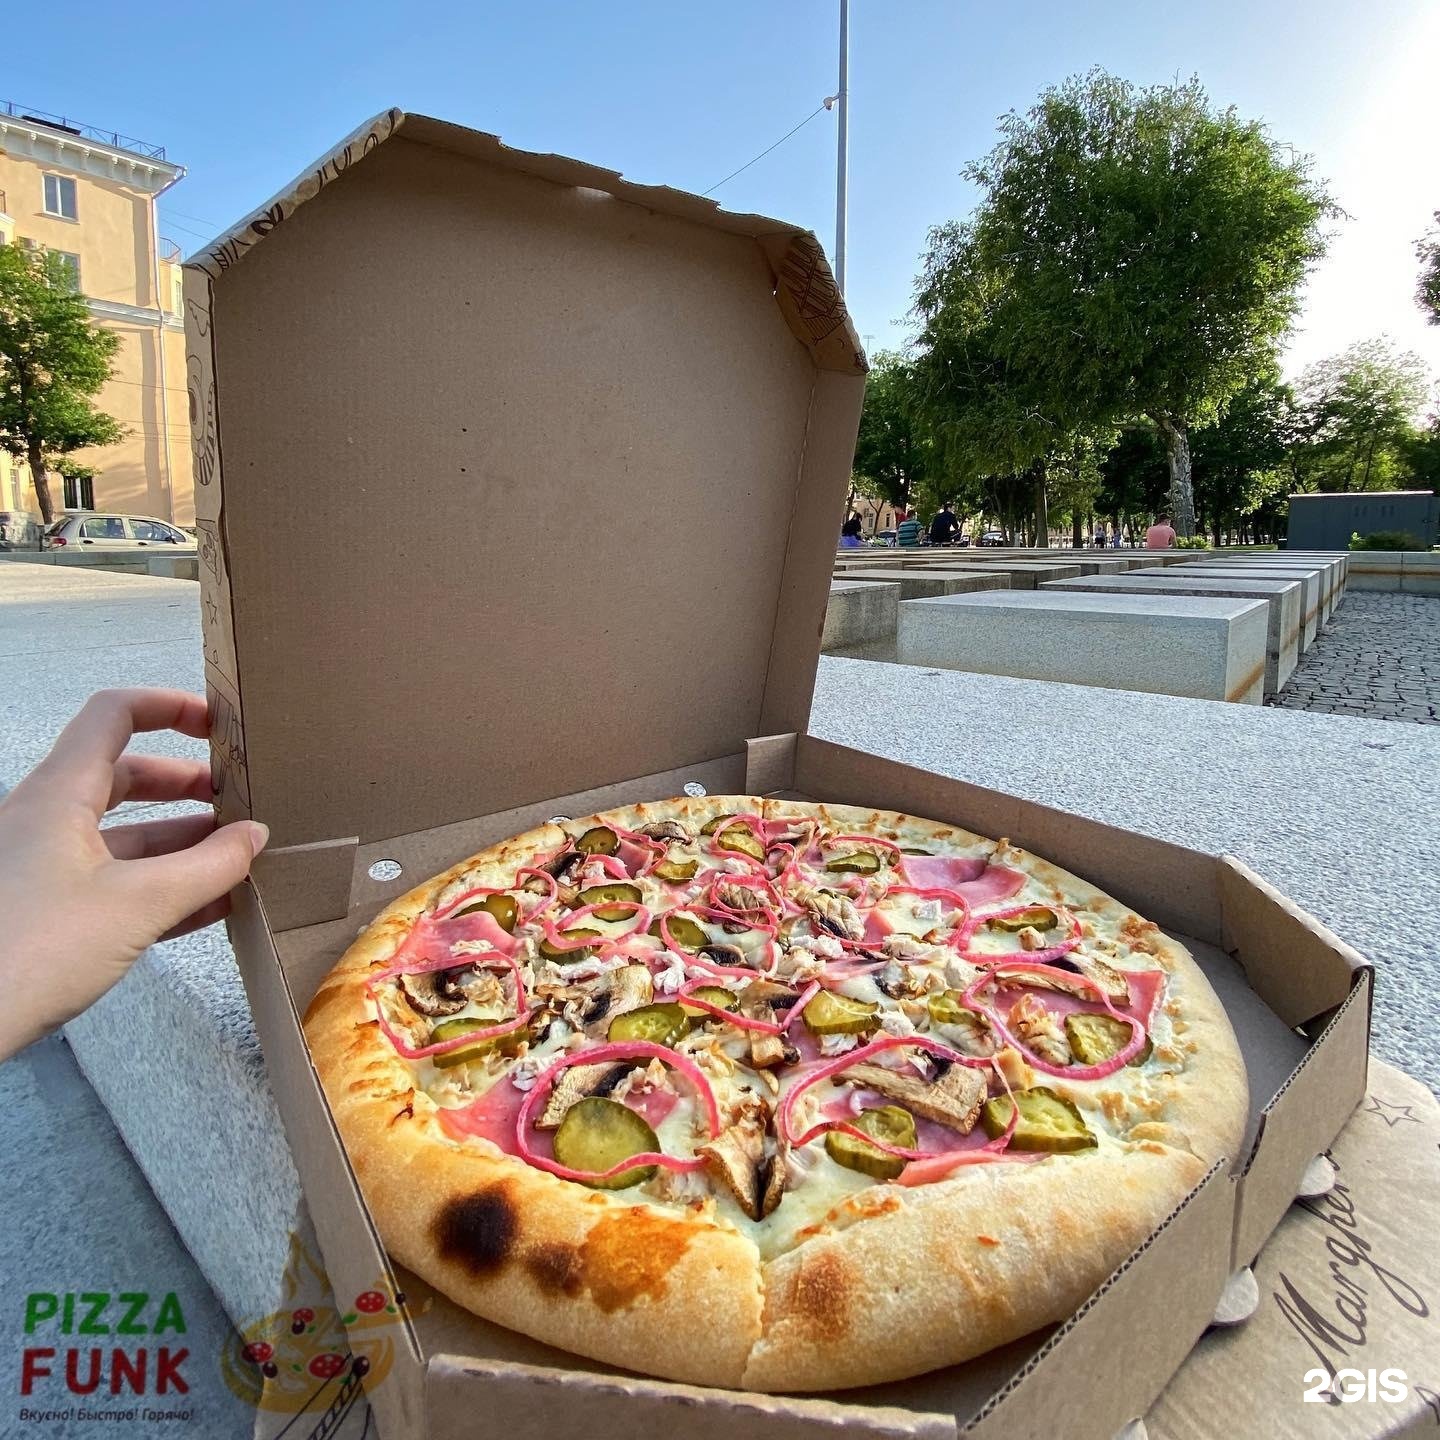 Funk do pizza 2ke. Фанки пицца. Pizza Funk Волгоград Ворошиловский район. Funk Fo pizza Funk. Its time to get Funky pizza Tower ананас.